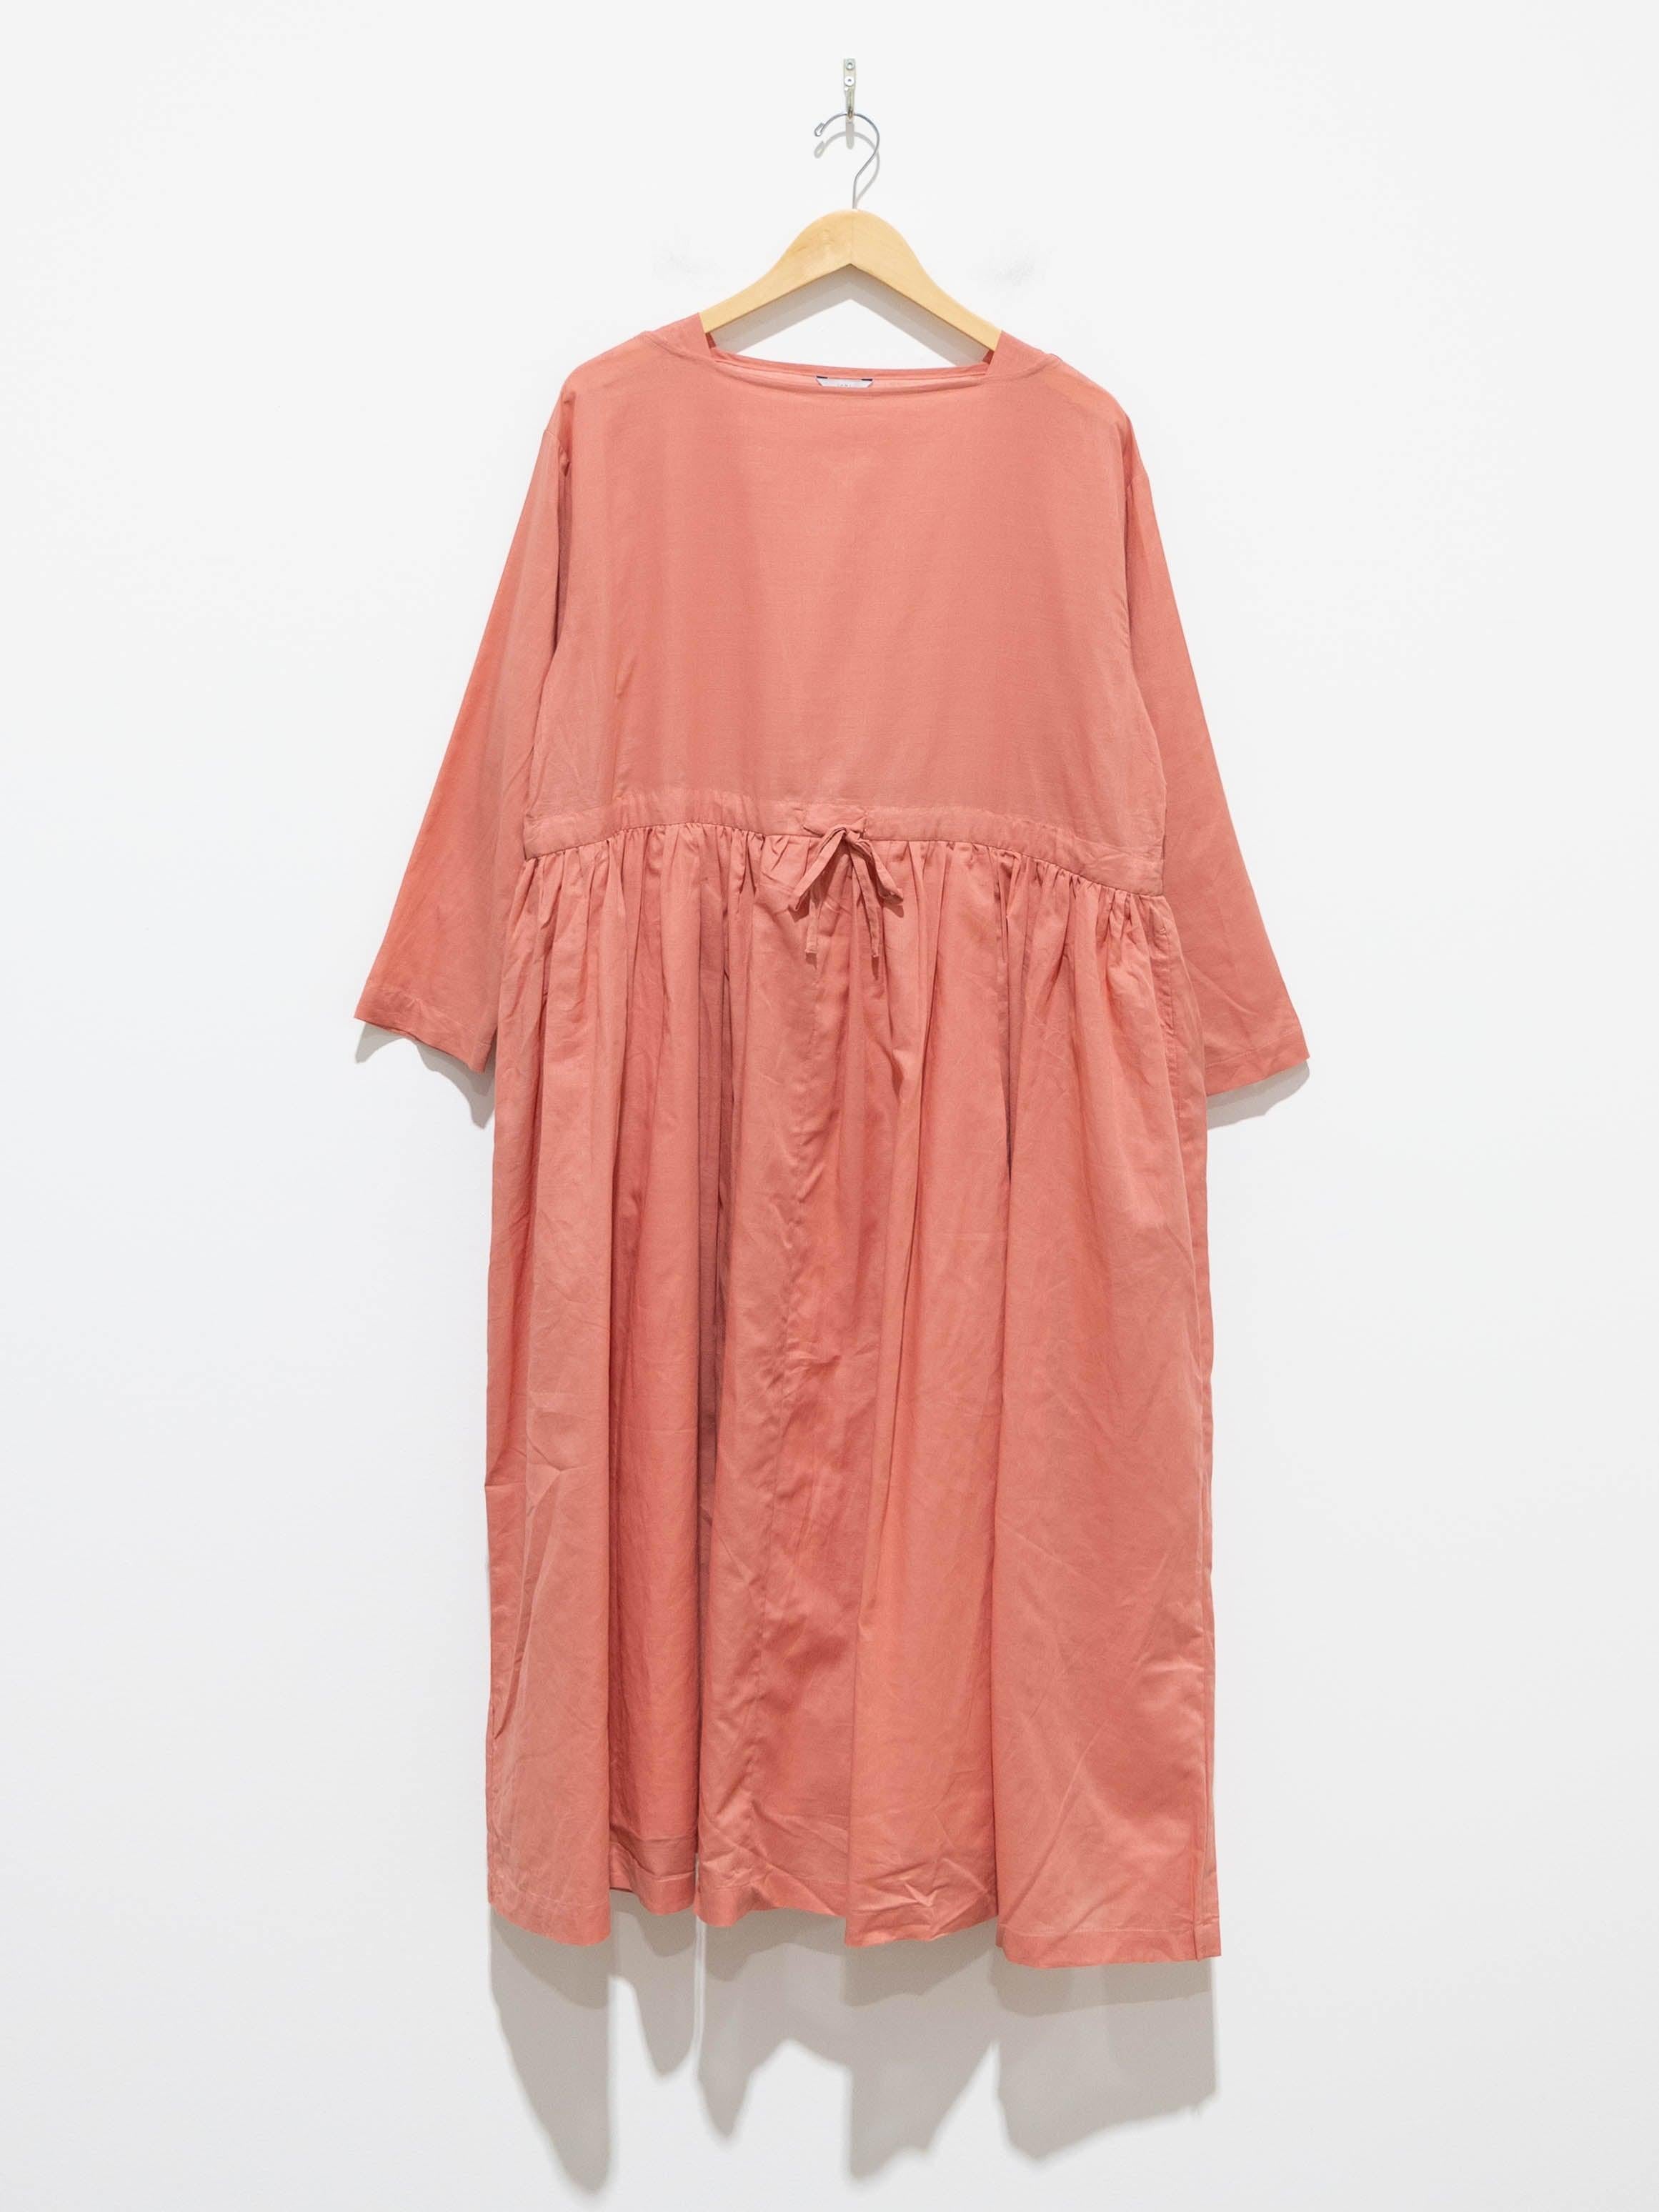 Namu Shop - Ichi Antiquites Co/Li Volume Gather Dress - Coral